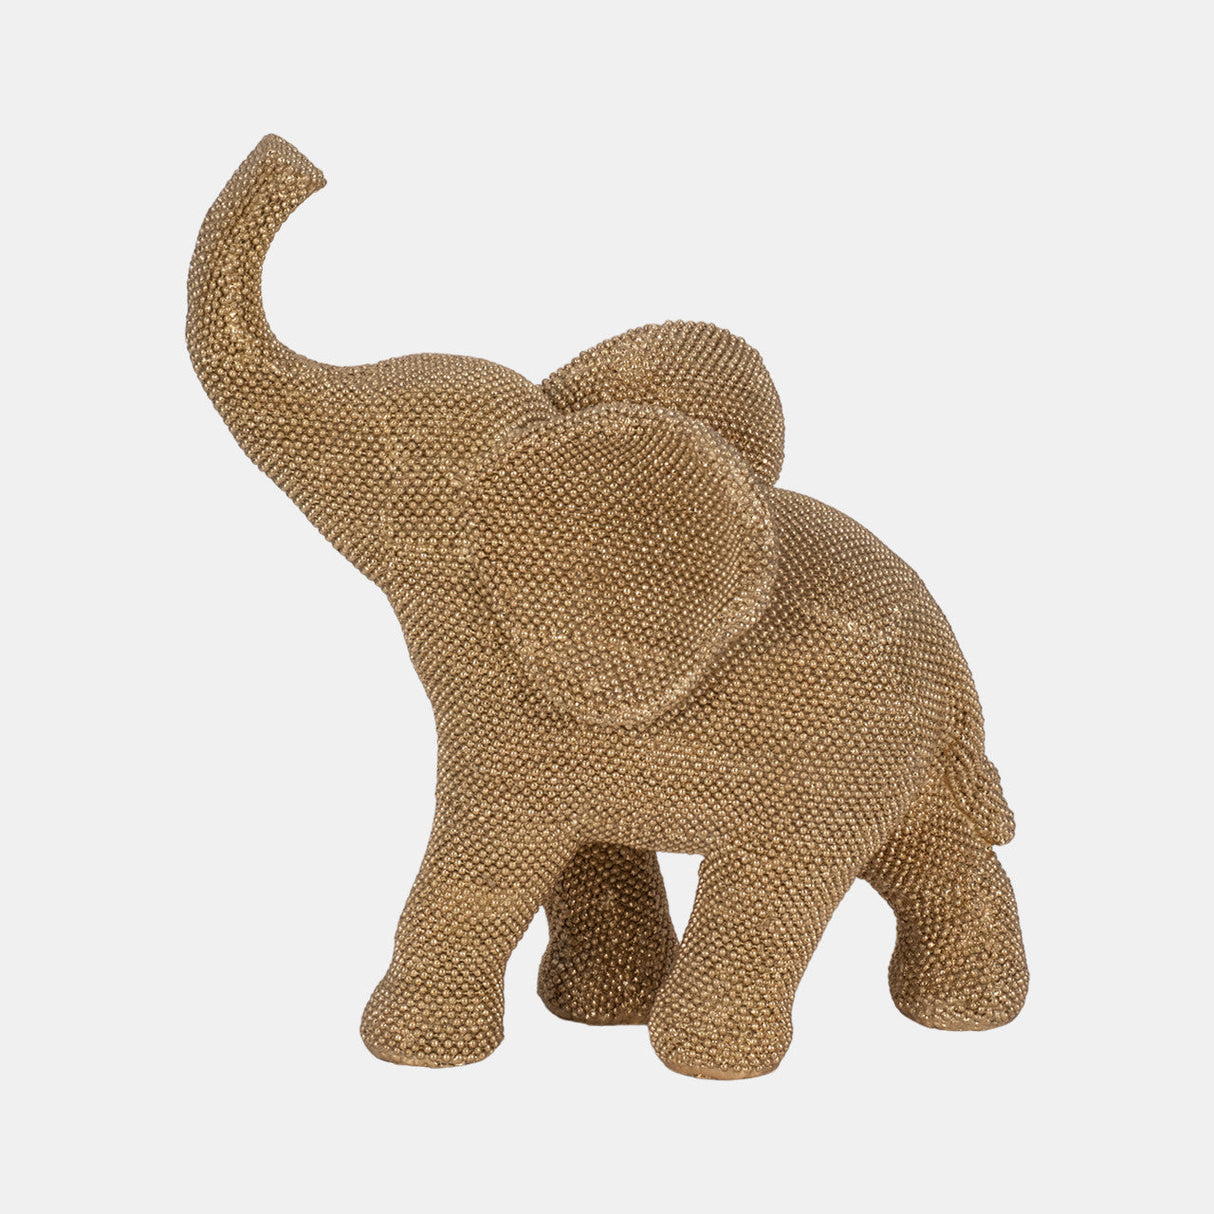 12" Beaded Elephant, Gold